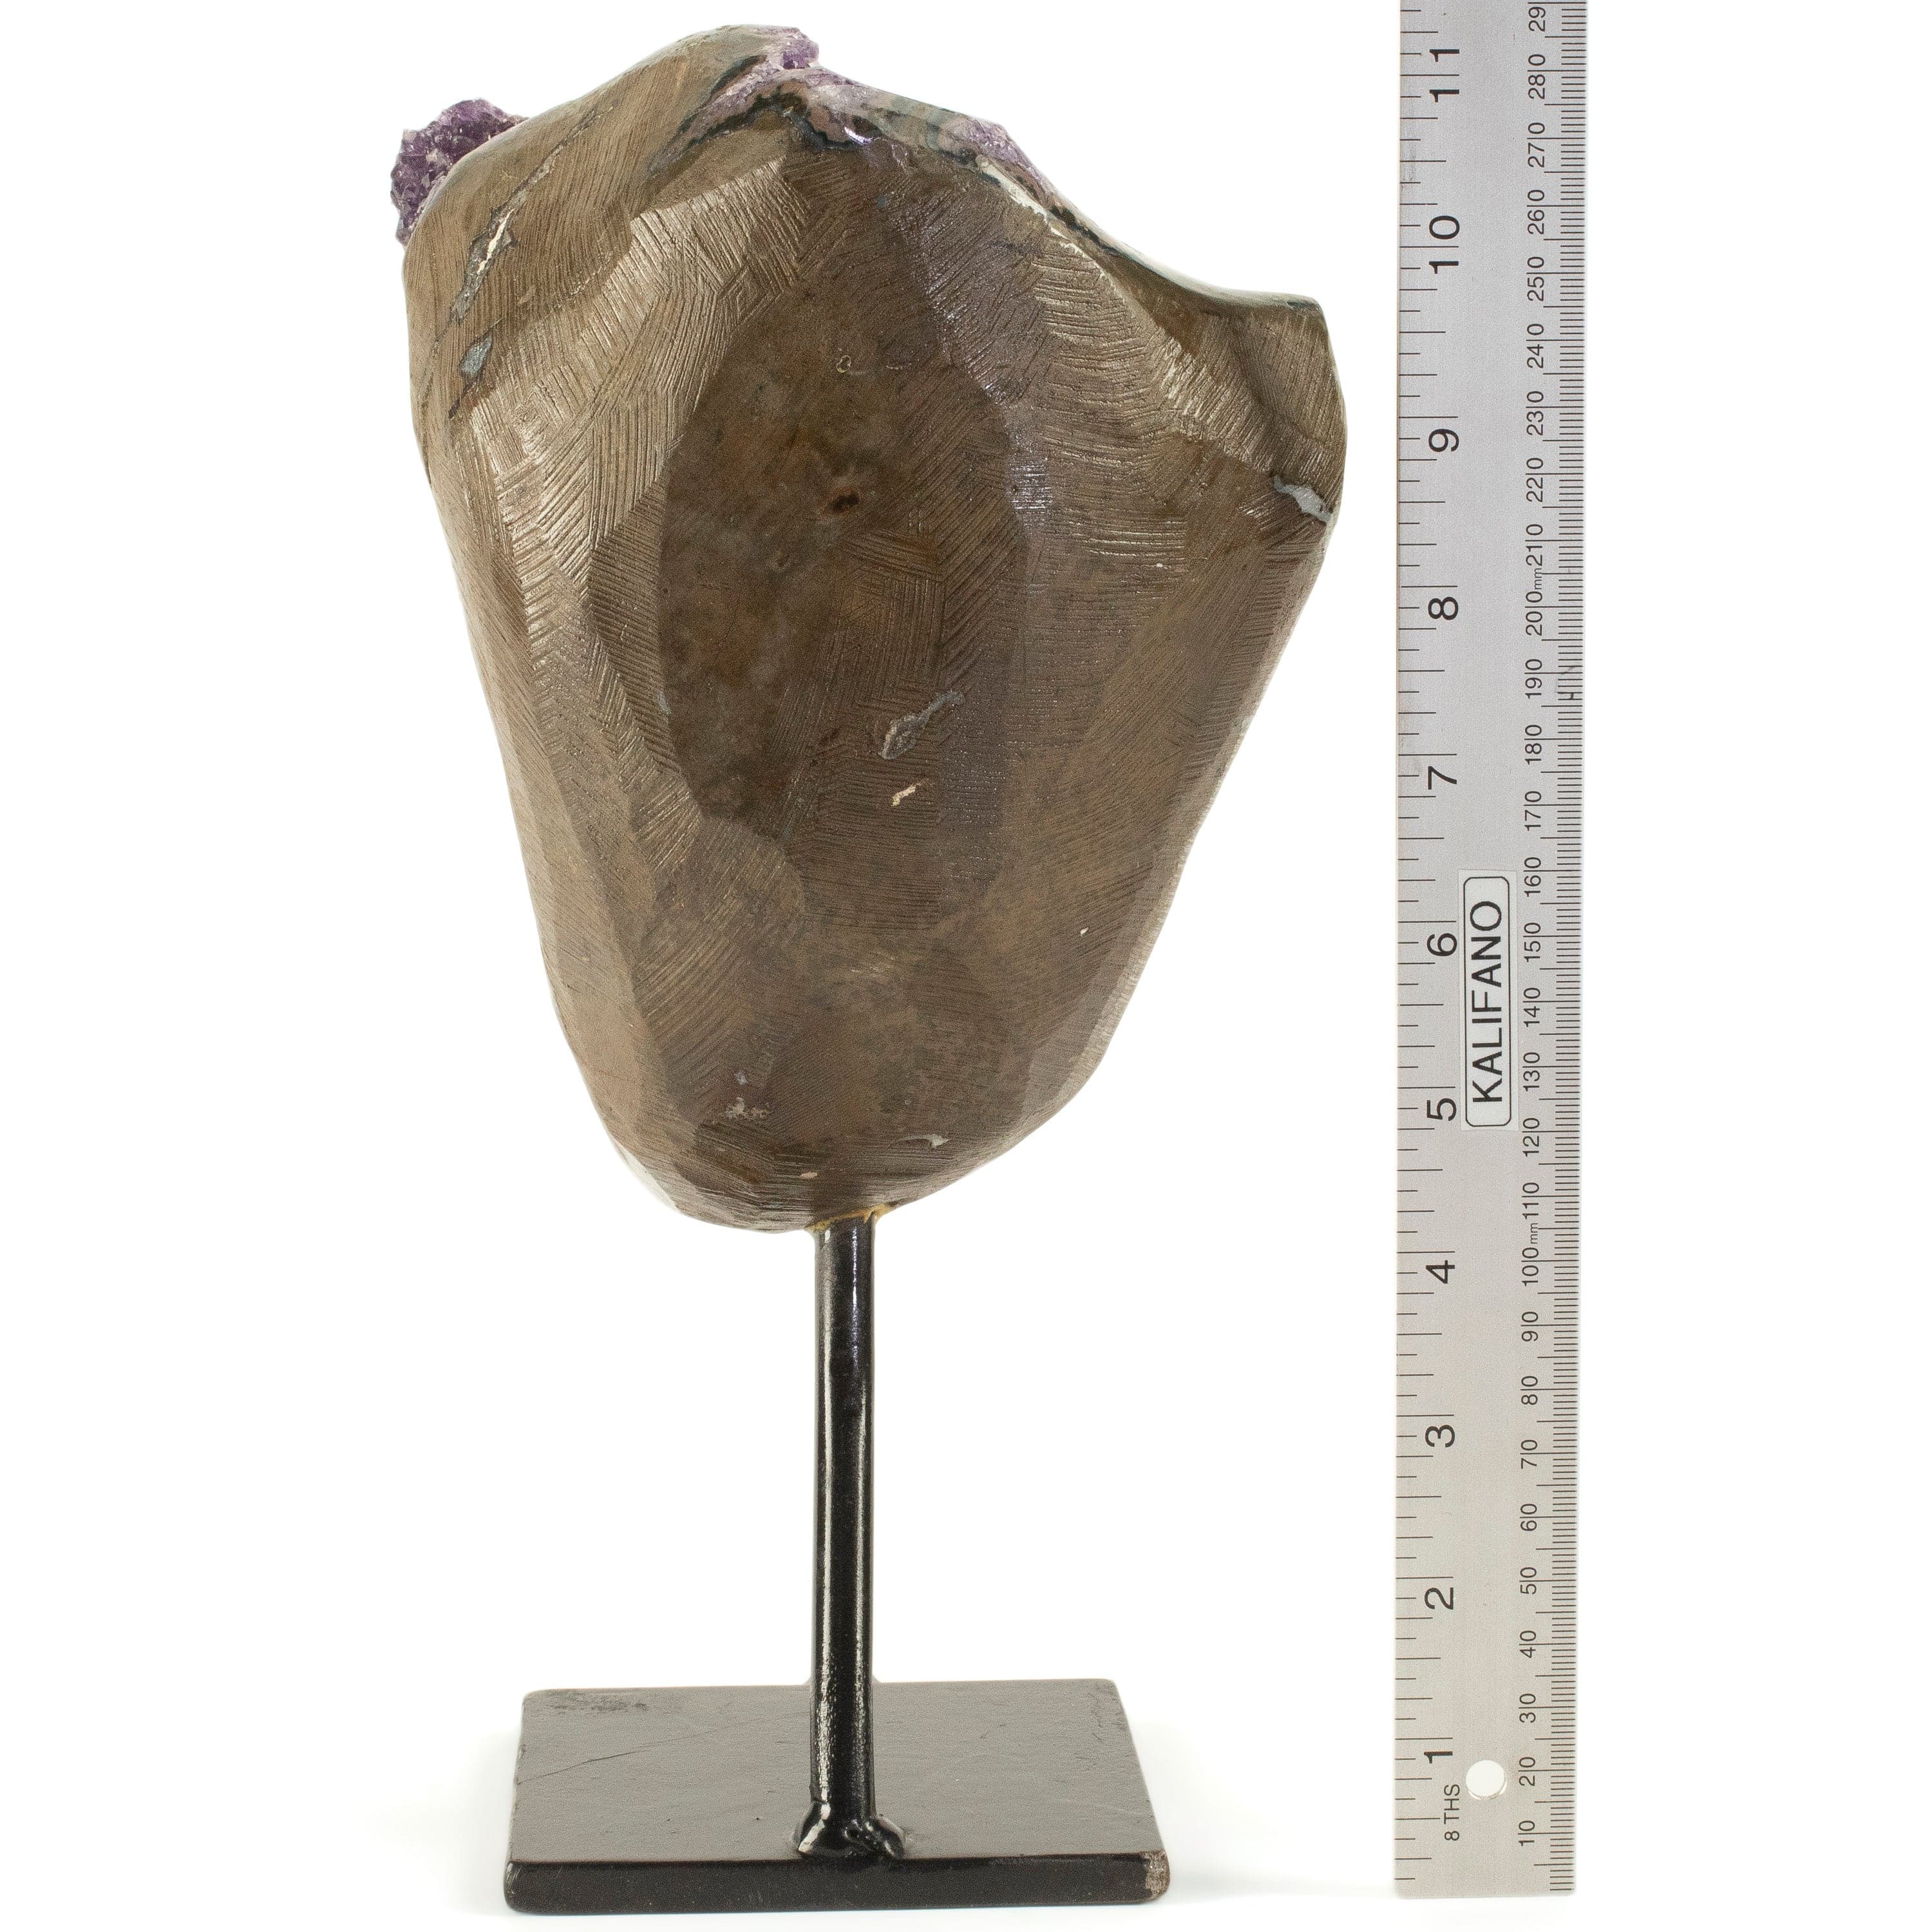 Kalifano Amethyst Uruguayan Amethyst Geode on Custom Stand - 9 lbs / 11 in. UAG4100.005